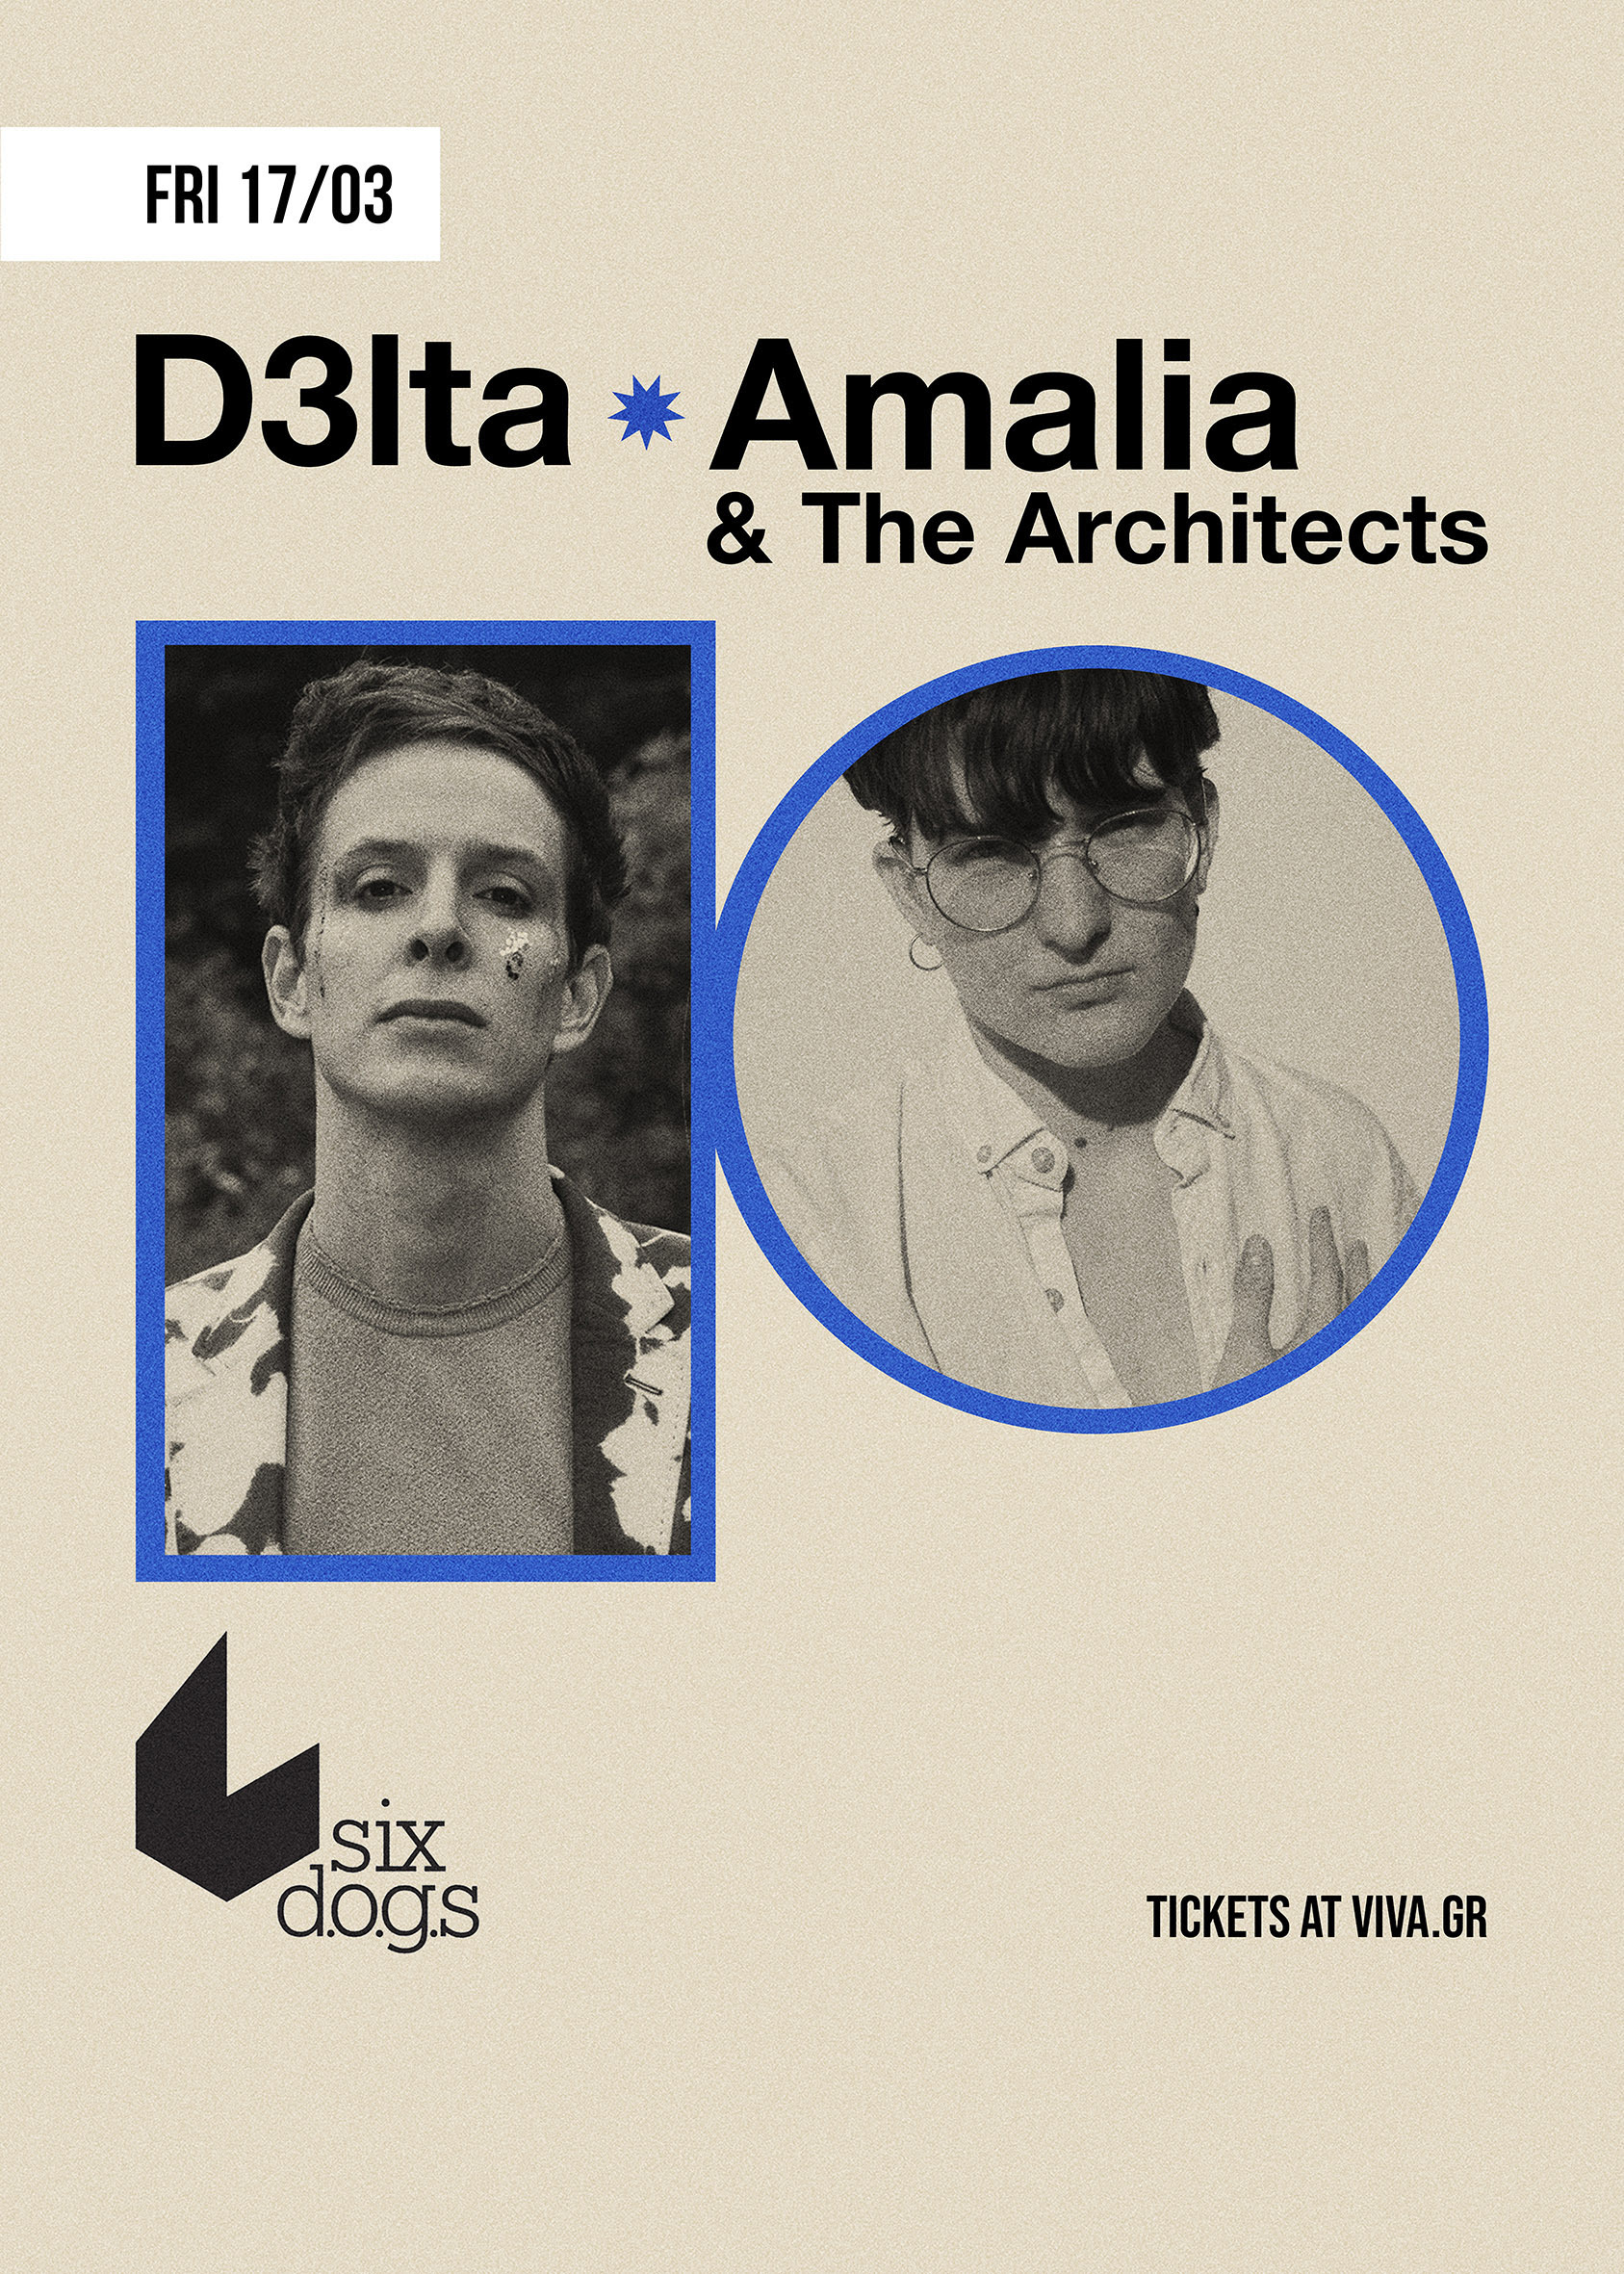 D3lta - Amalia